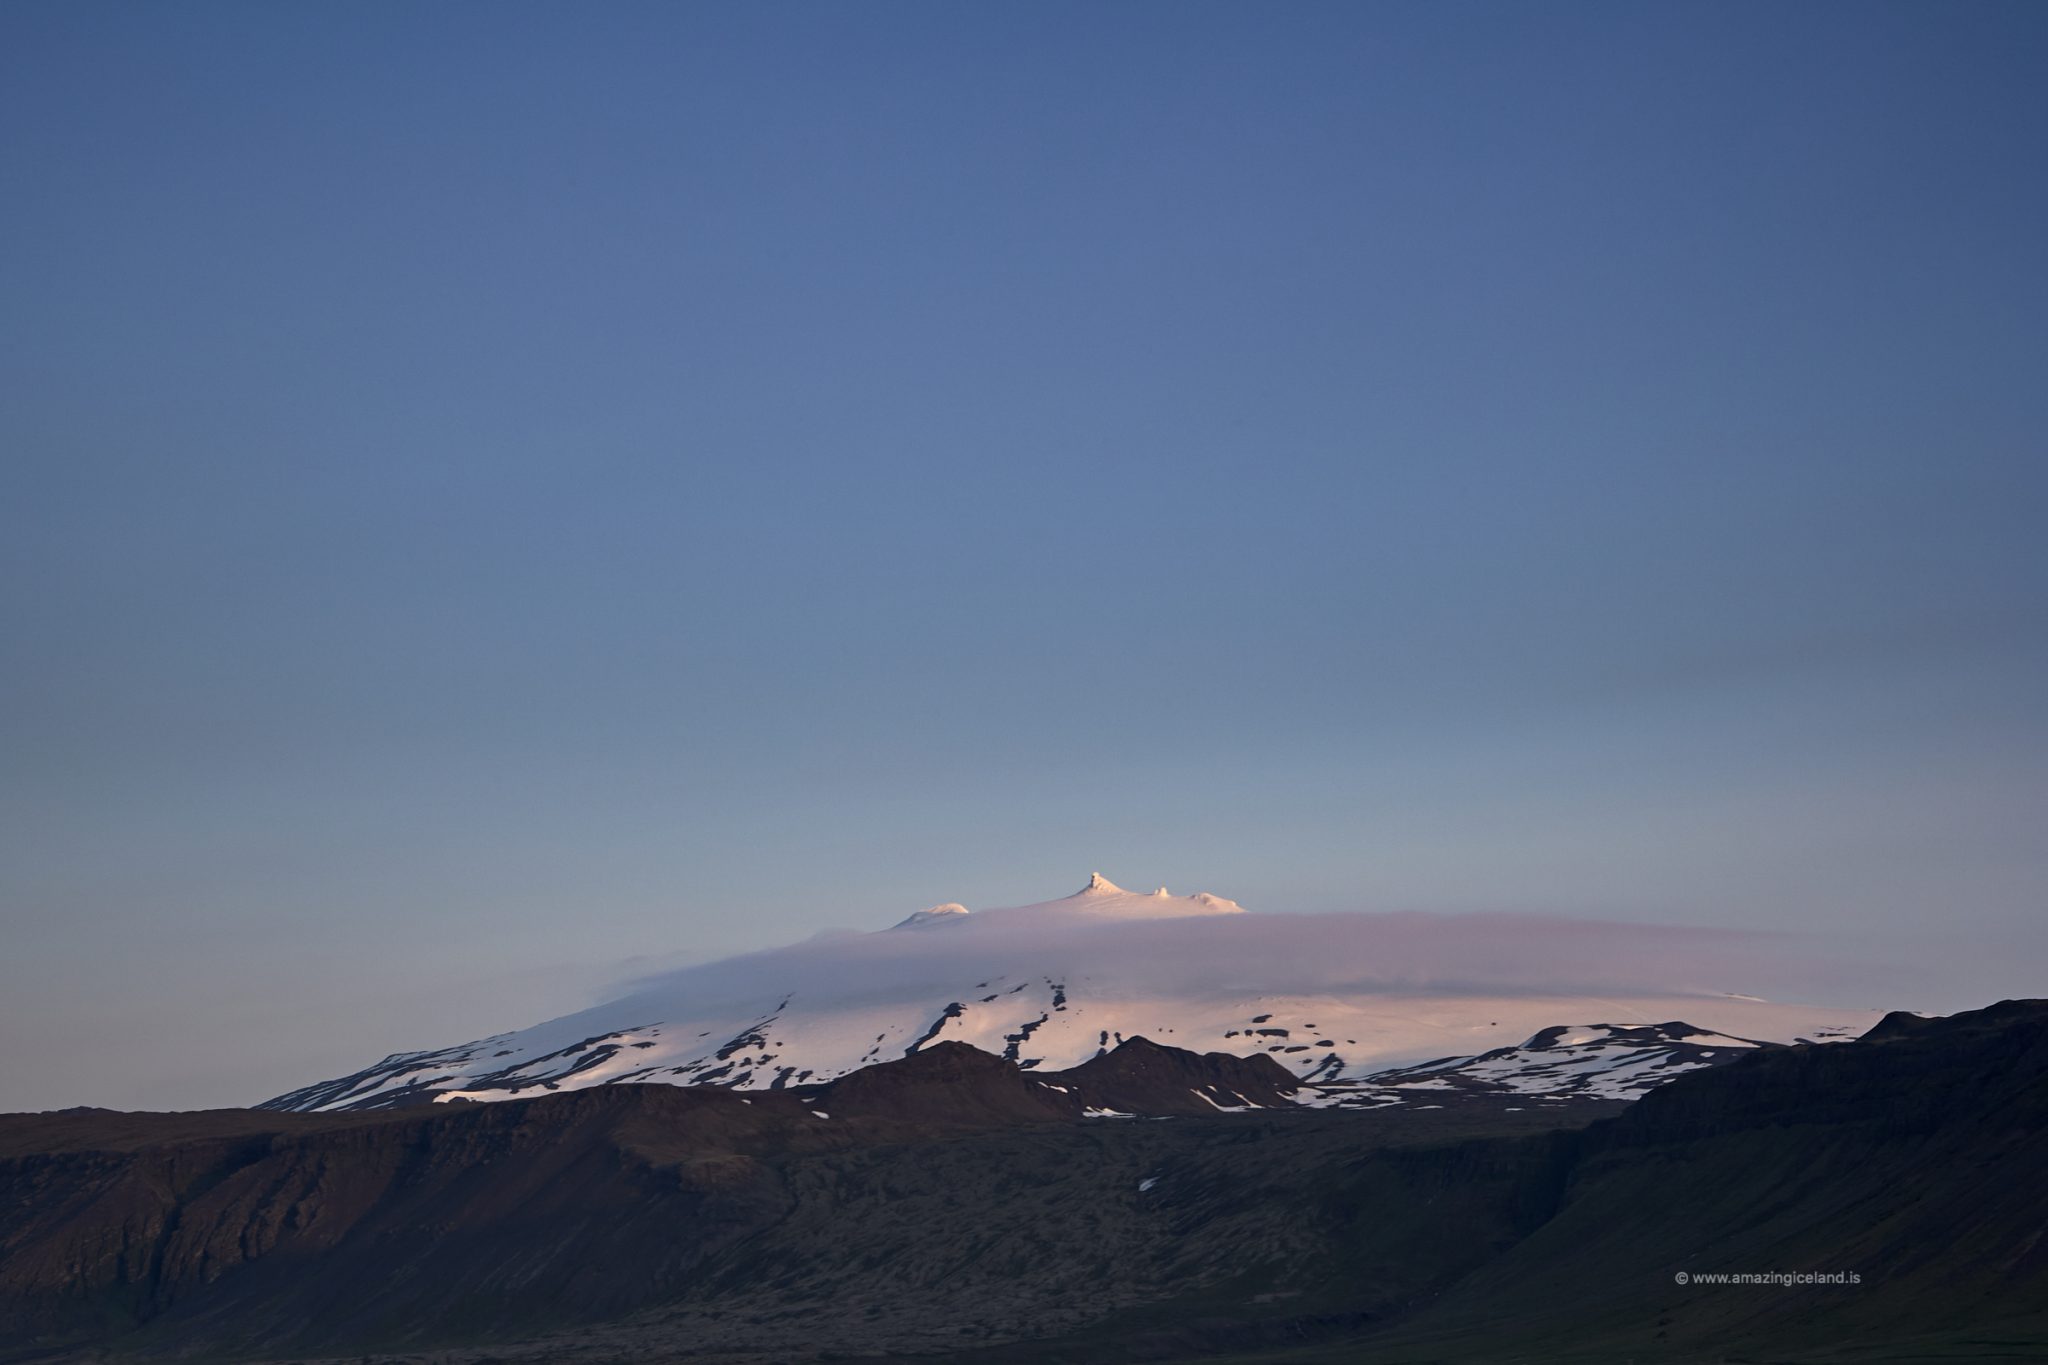 The stratovolcano Snæfellsjökull in Snæfellsnes Iceland